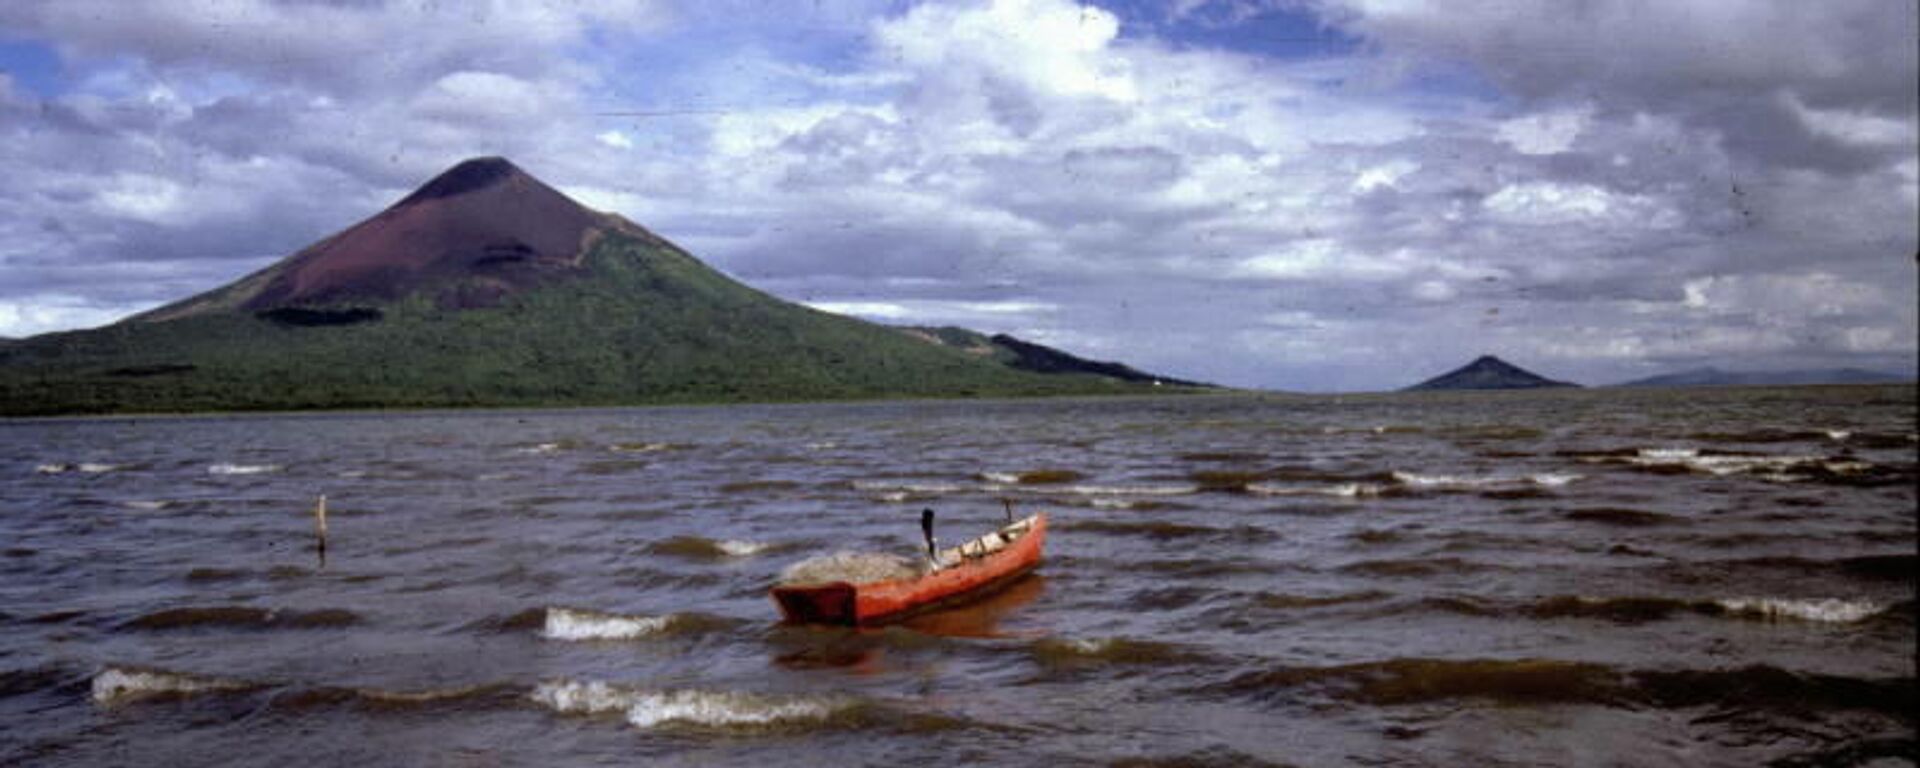 El Lago Managua - Sputnik Mundo, 1920, 25.08.2021